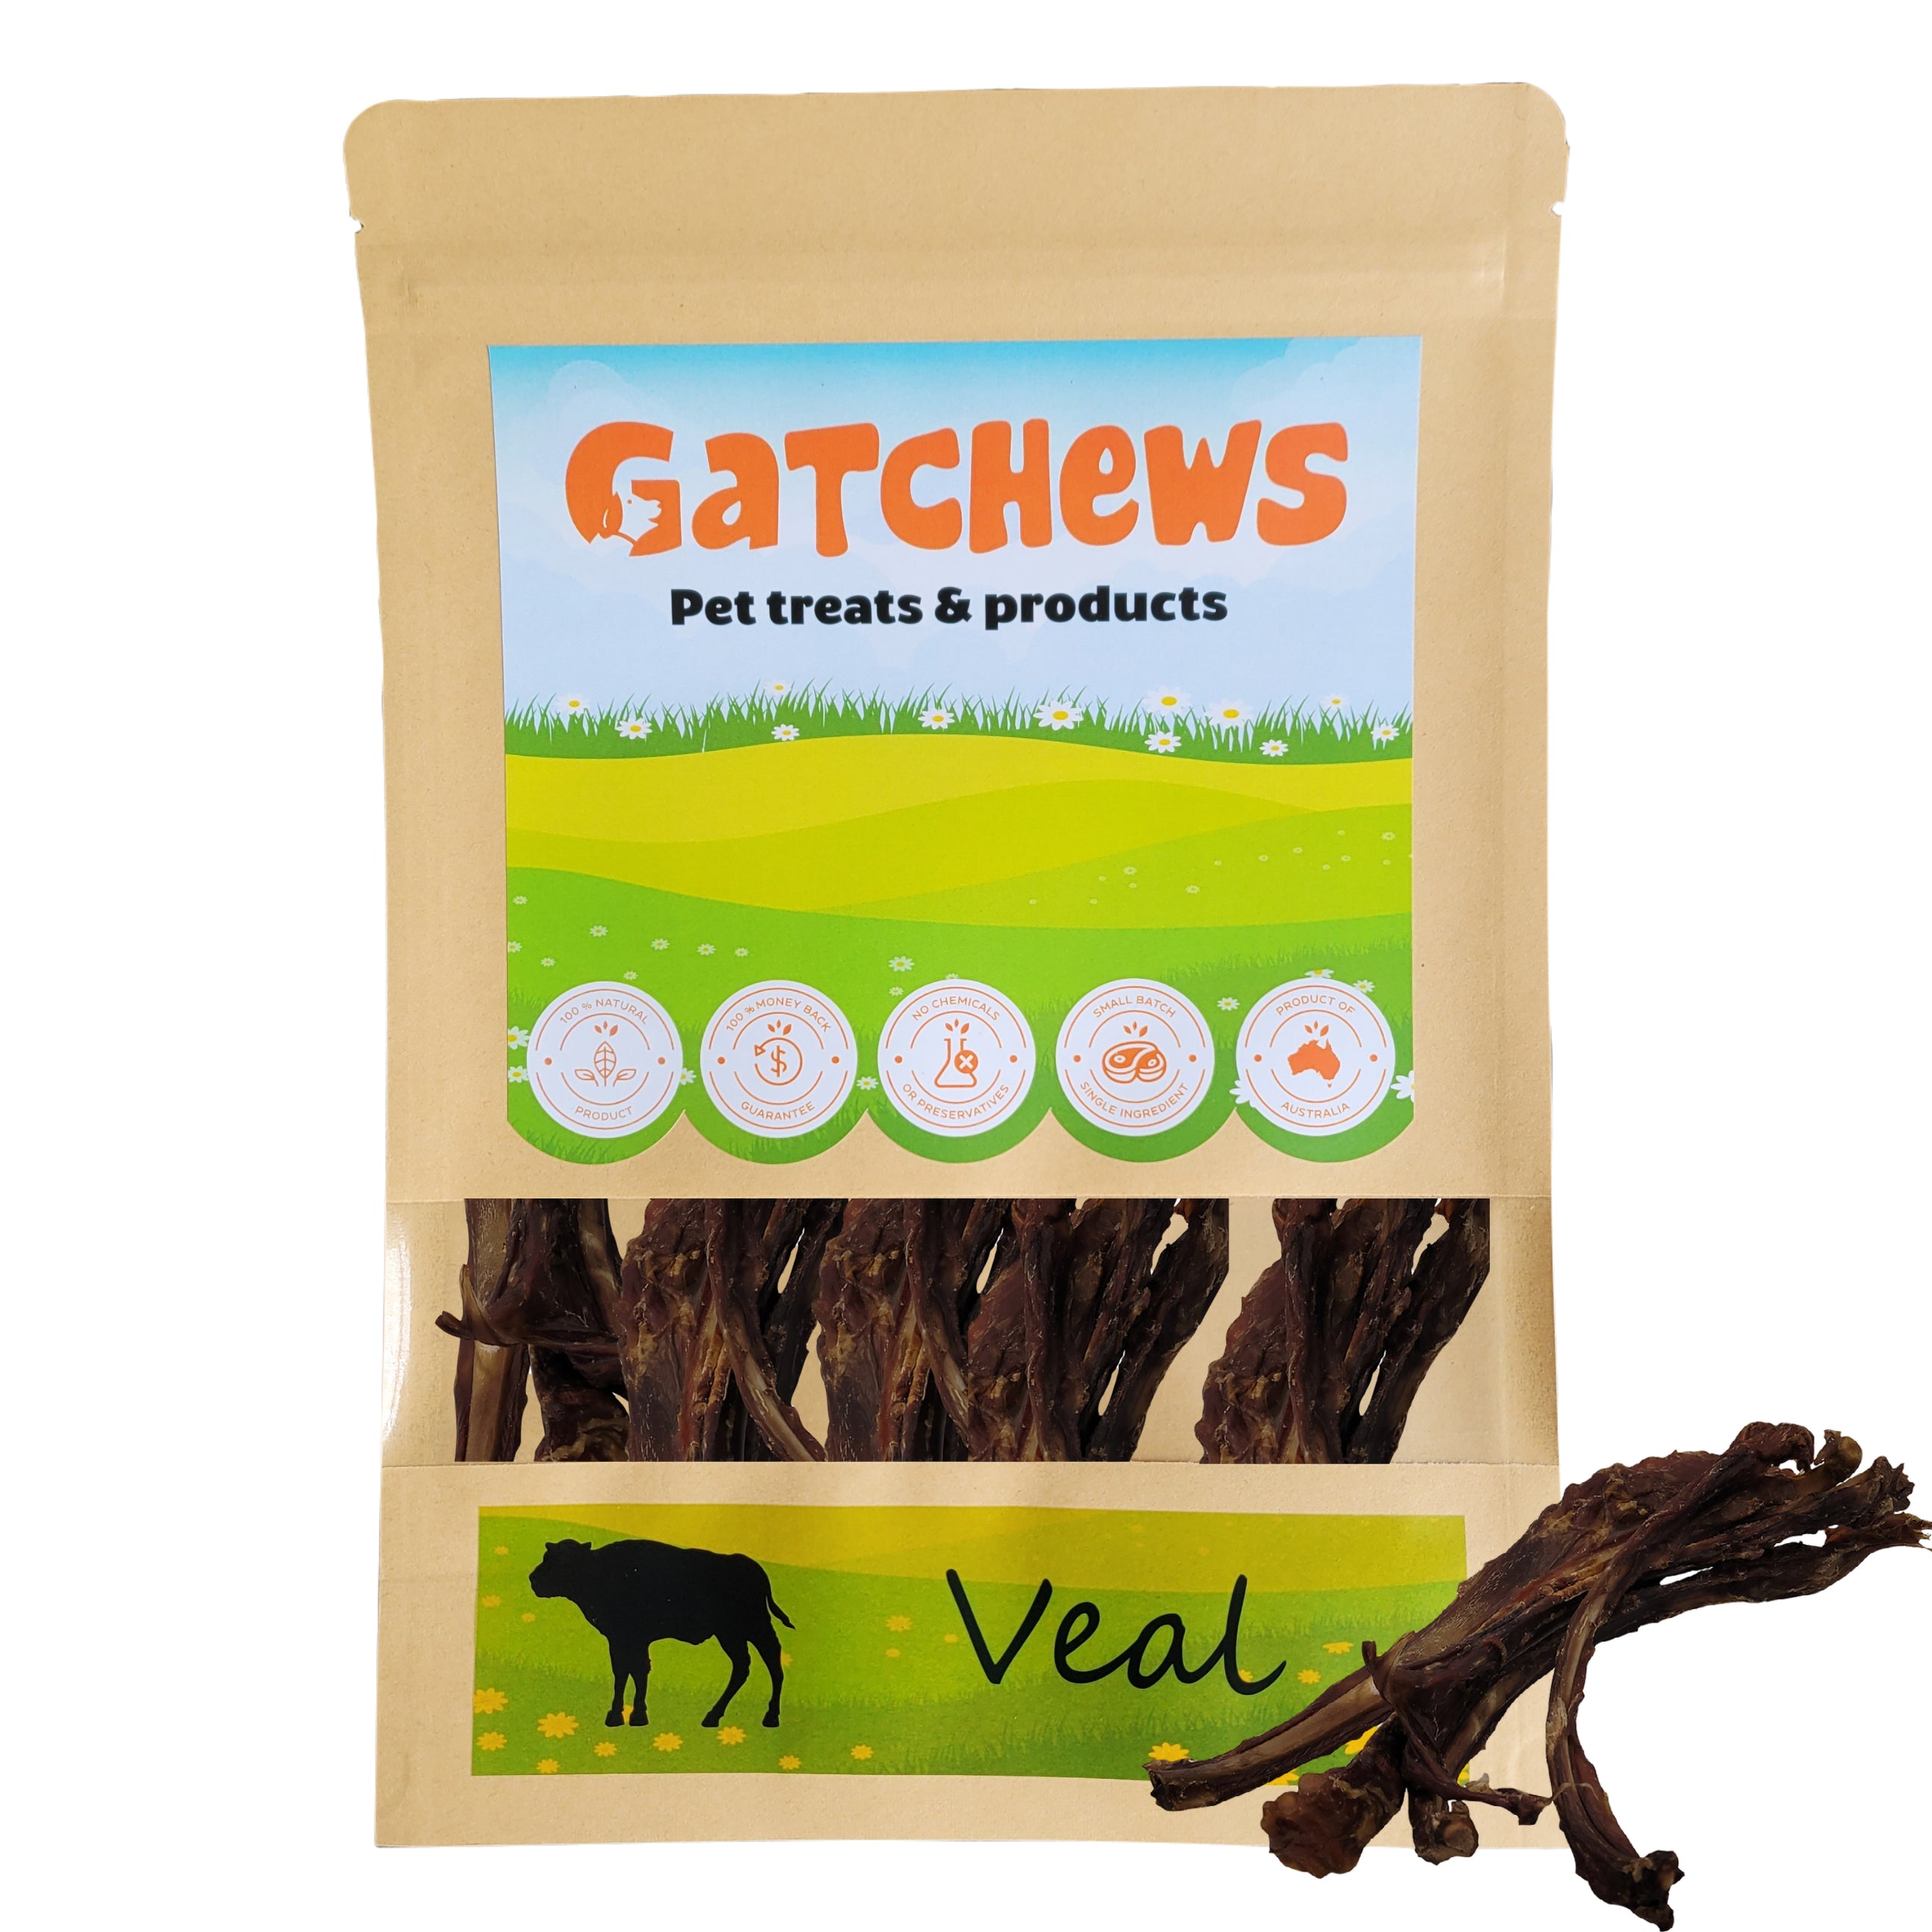 Gatchews Happy Town Pets Veal rib sticks chews & treats package (6570206331041)